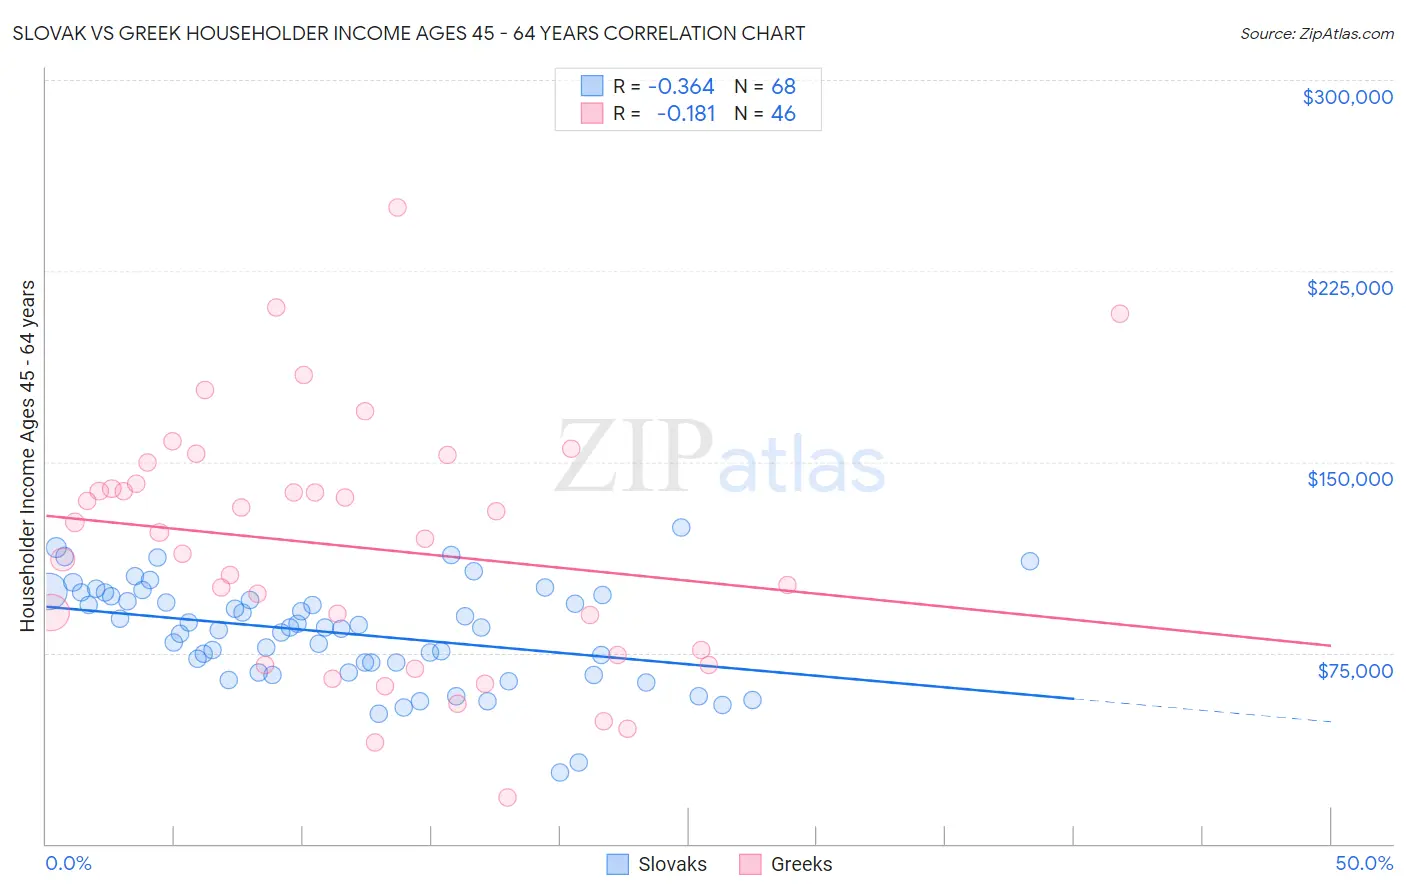 Slovak vs Greek Householder Income Ages 45 - 64 years